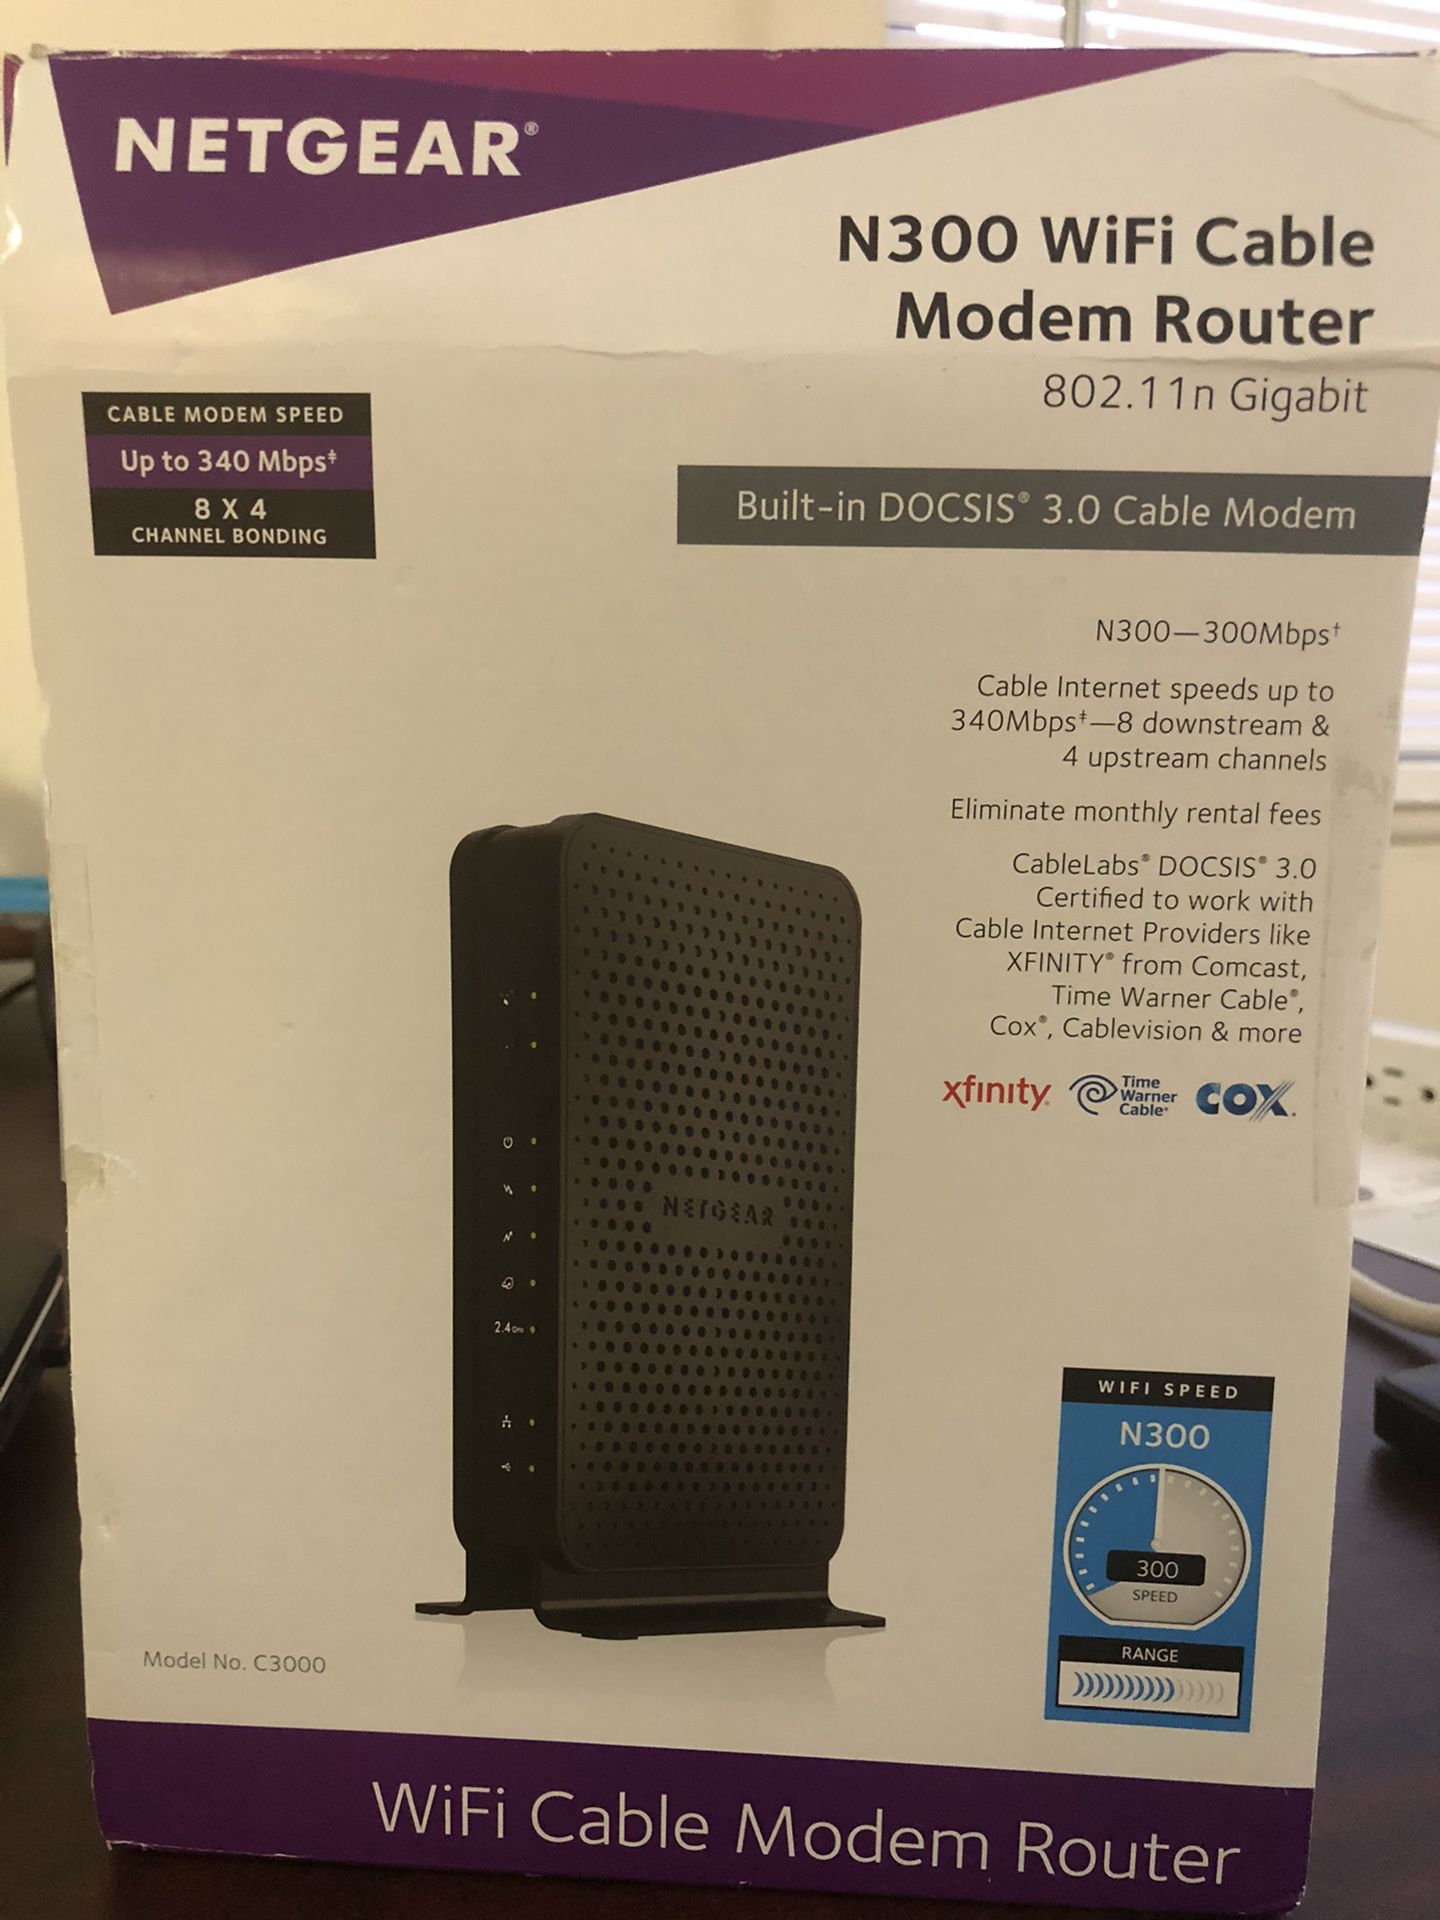 Netgear N300 WiFi Cable Modem Router